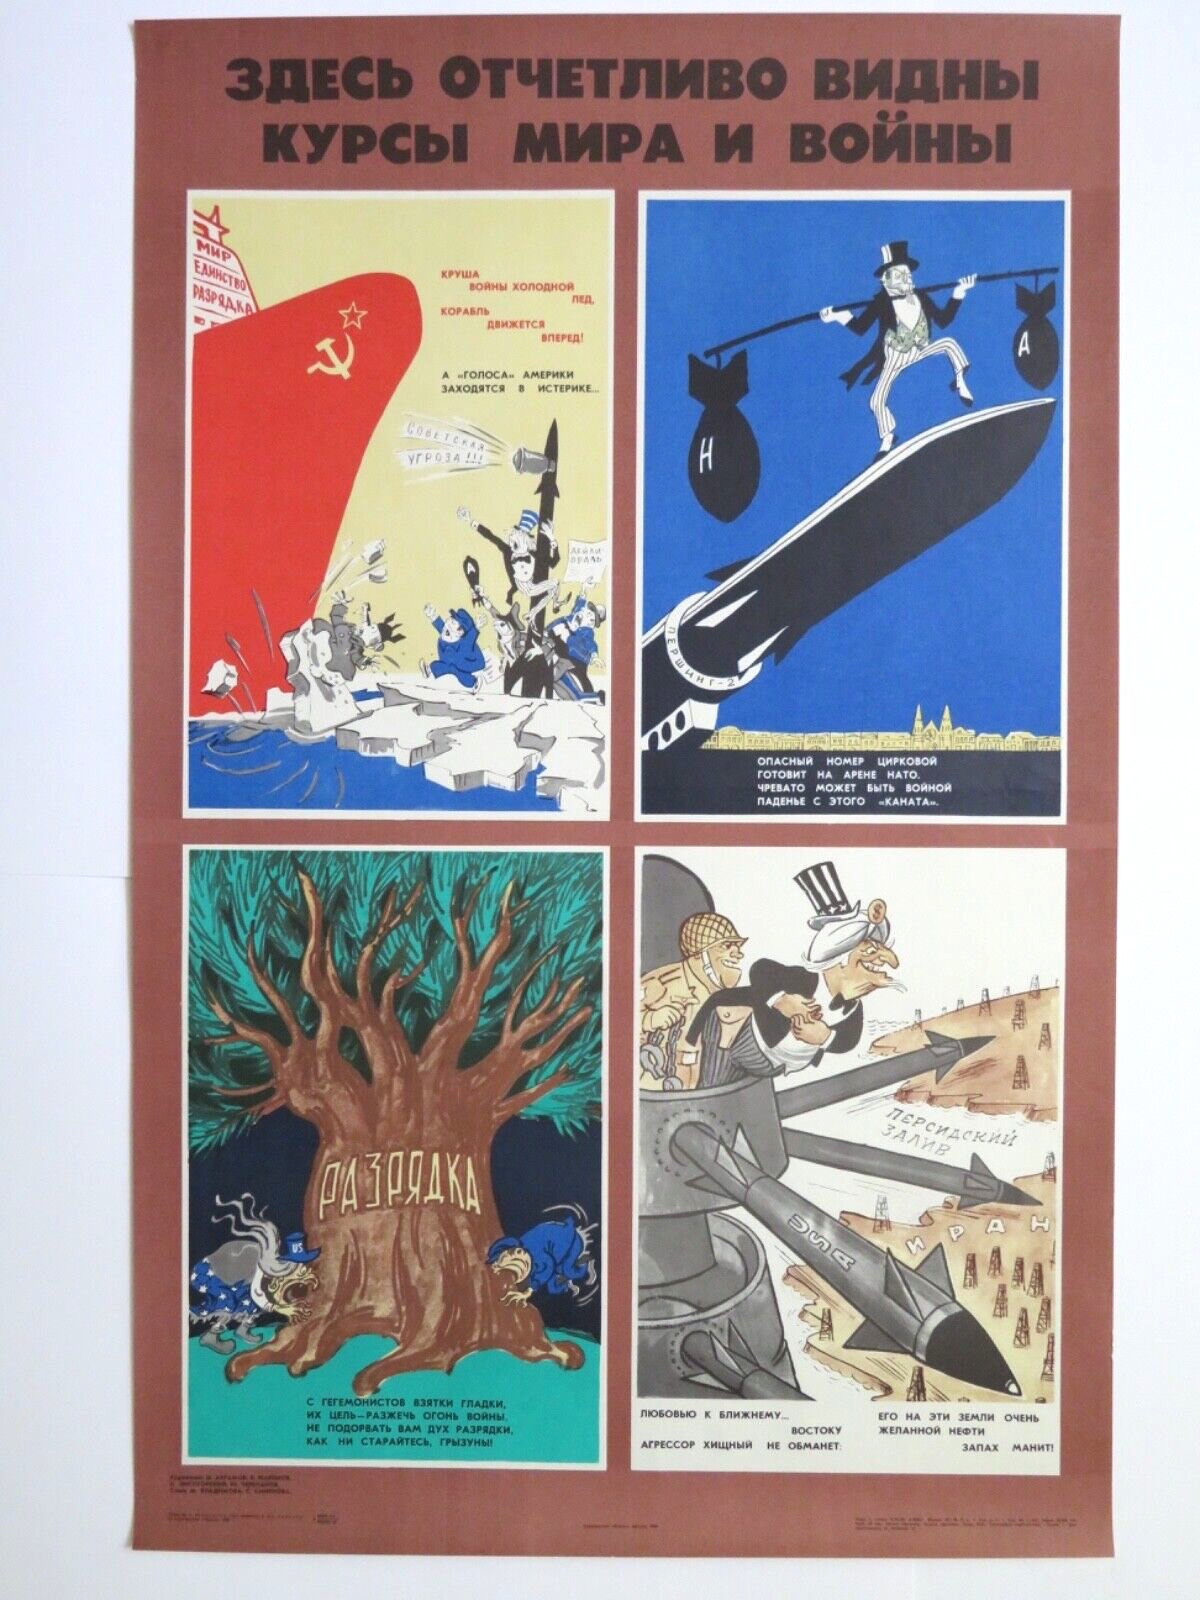 RARE Soviet Art Propaganda Poster, PEACE WAR COURSE, Cold War, Anti USA, Abramov